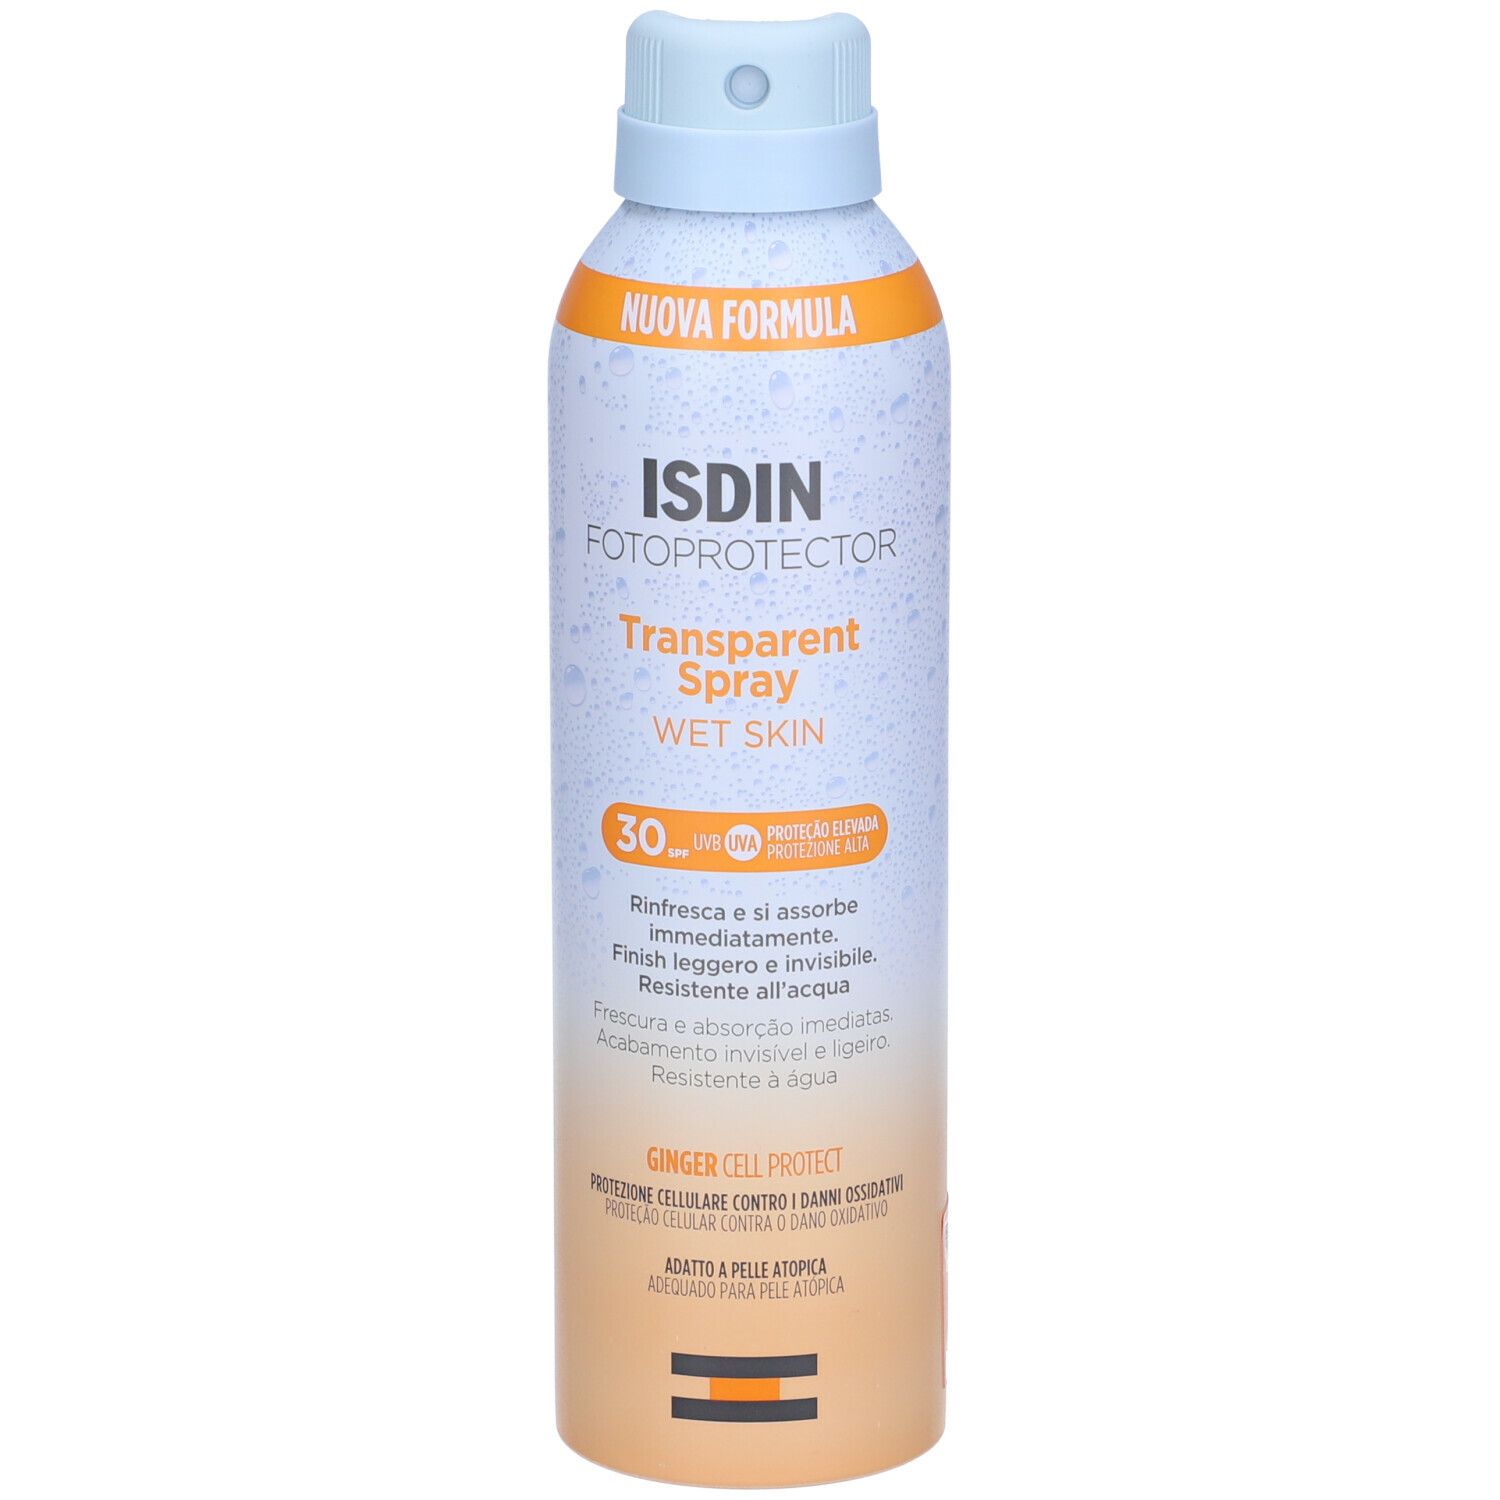 ISDIN Fotoprotector Transparent Spray Wet Skin SPF 30